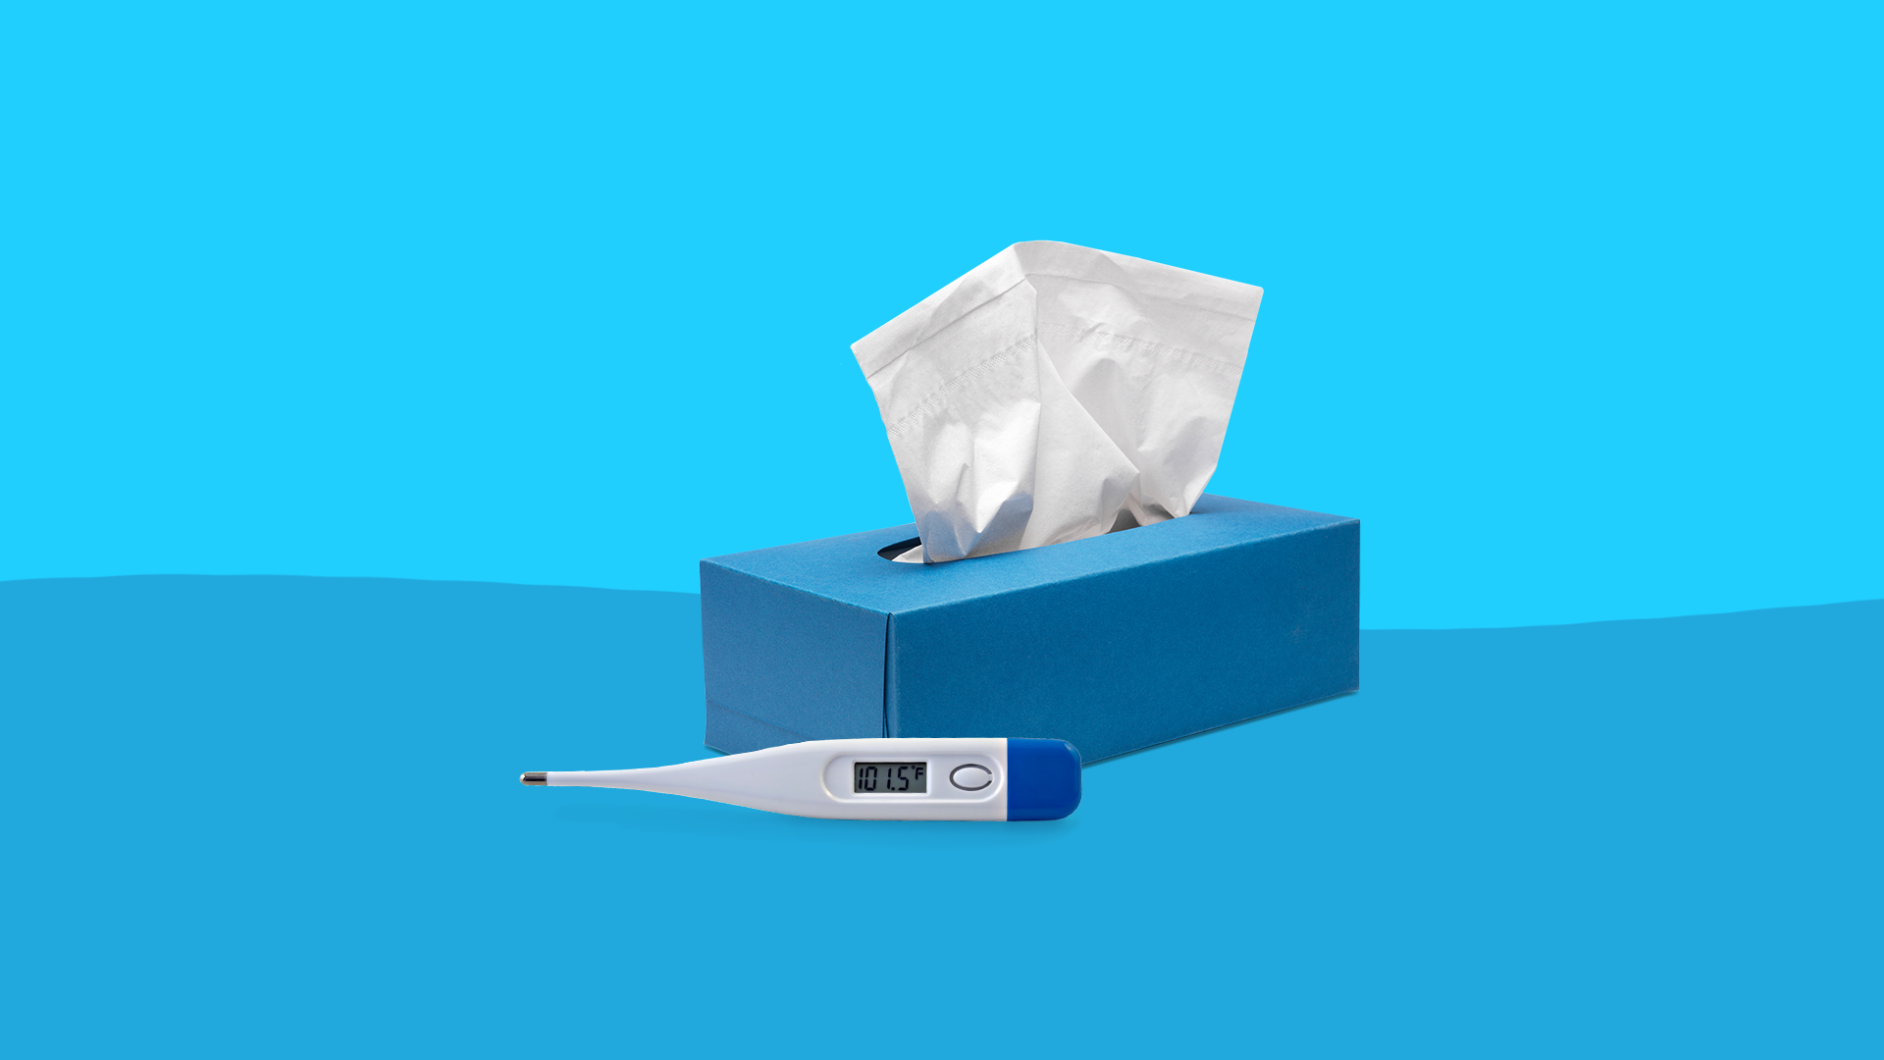 Flu symptoms - tissue box and thermometer